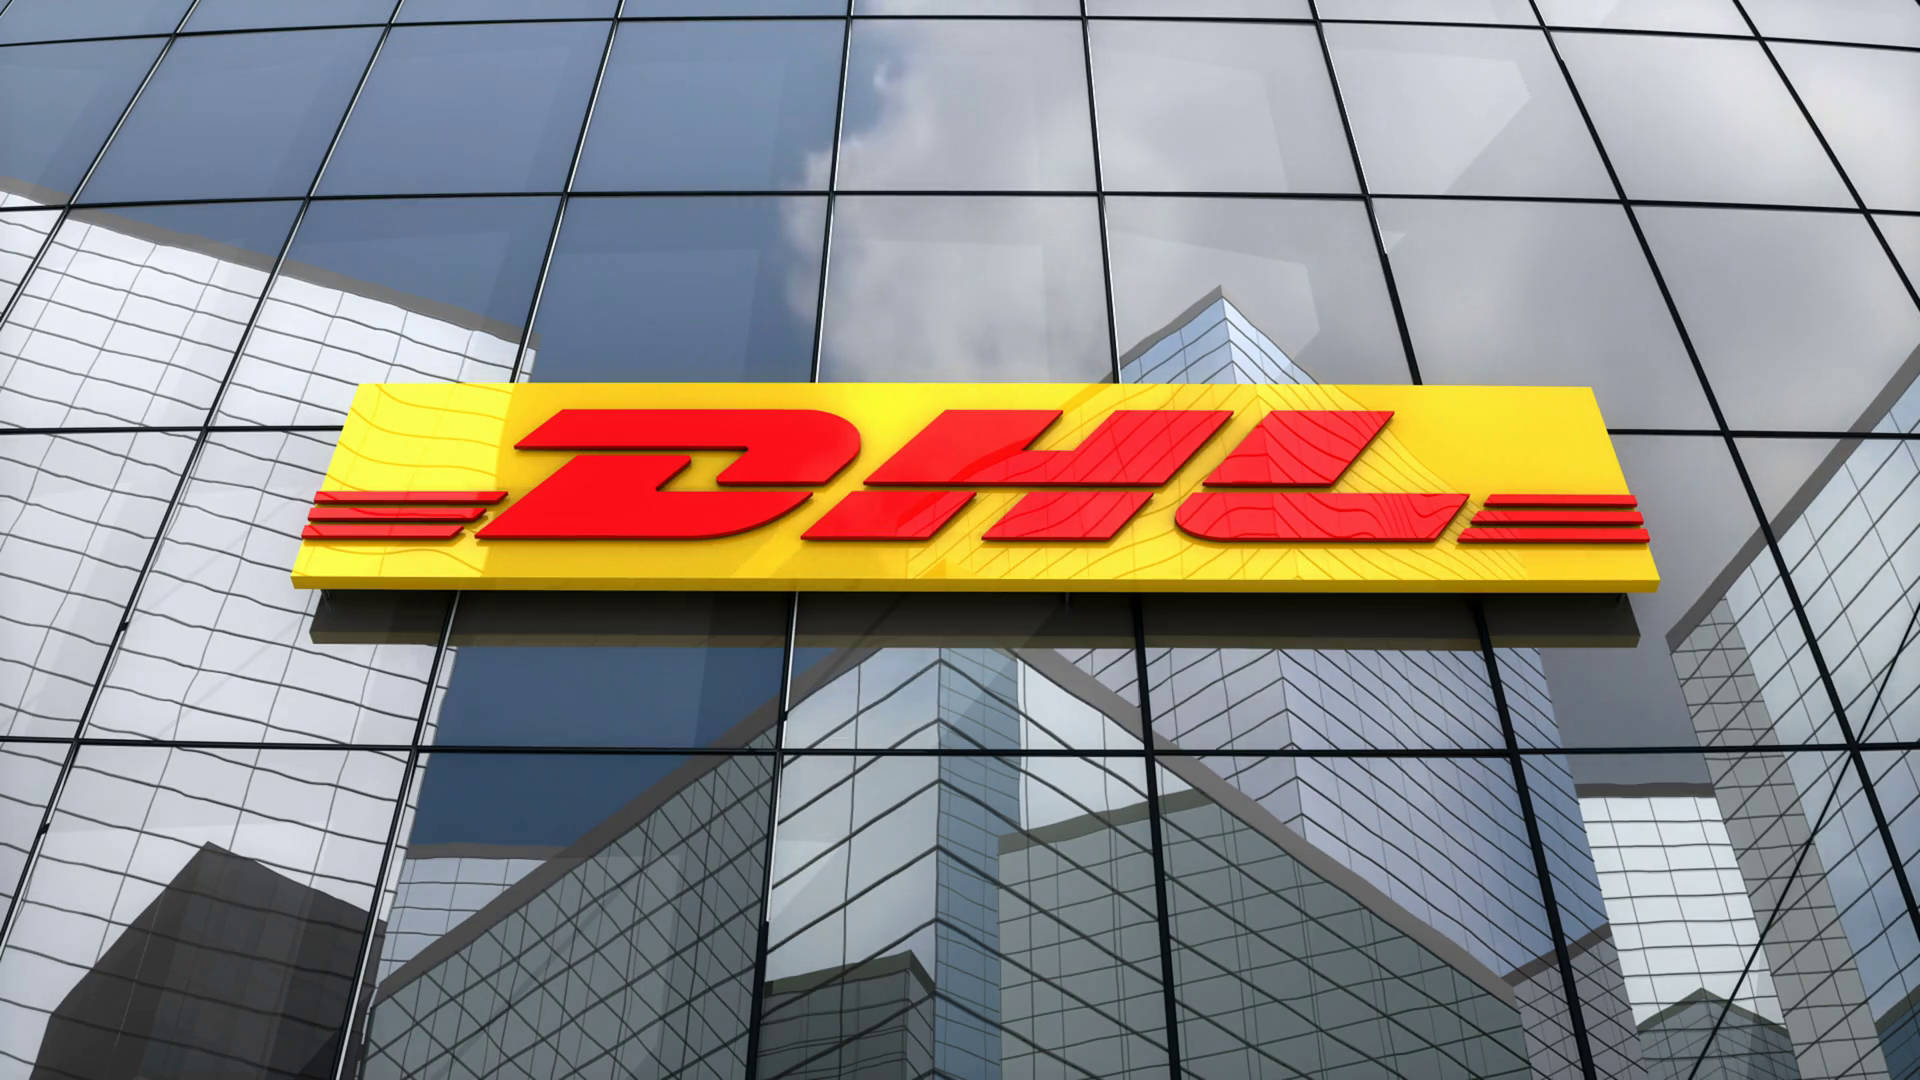 DHL Building Logo Wallpaper